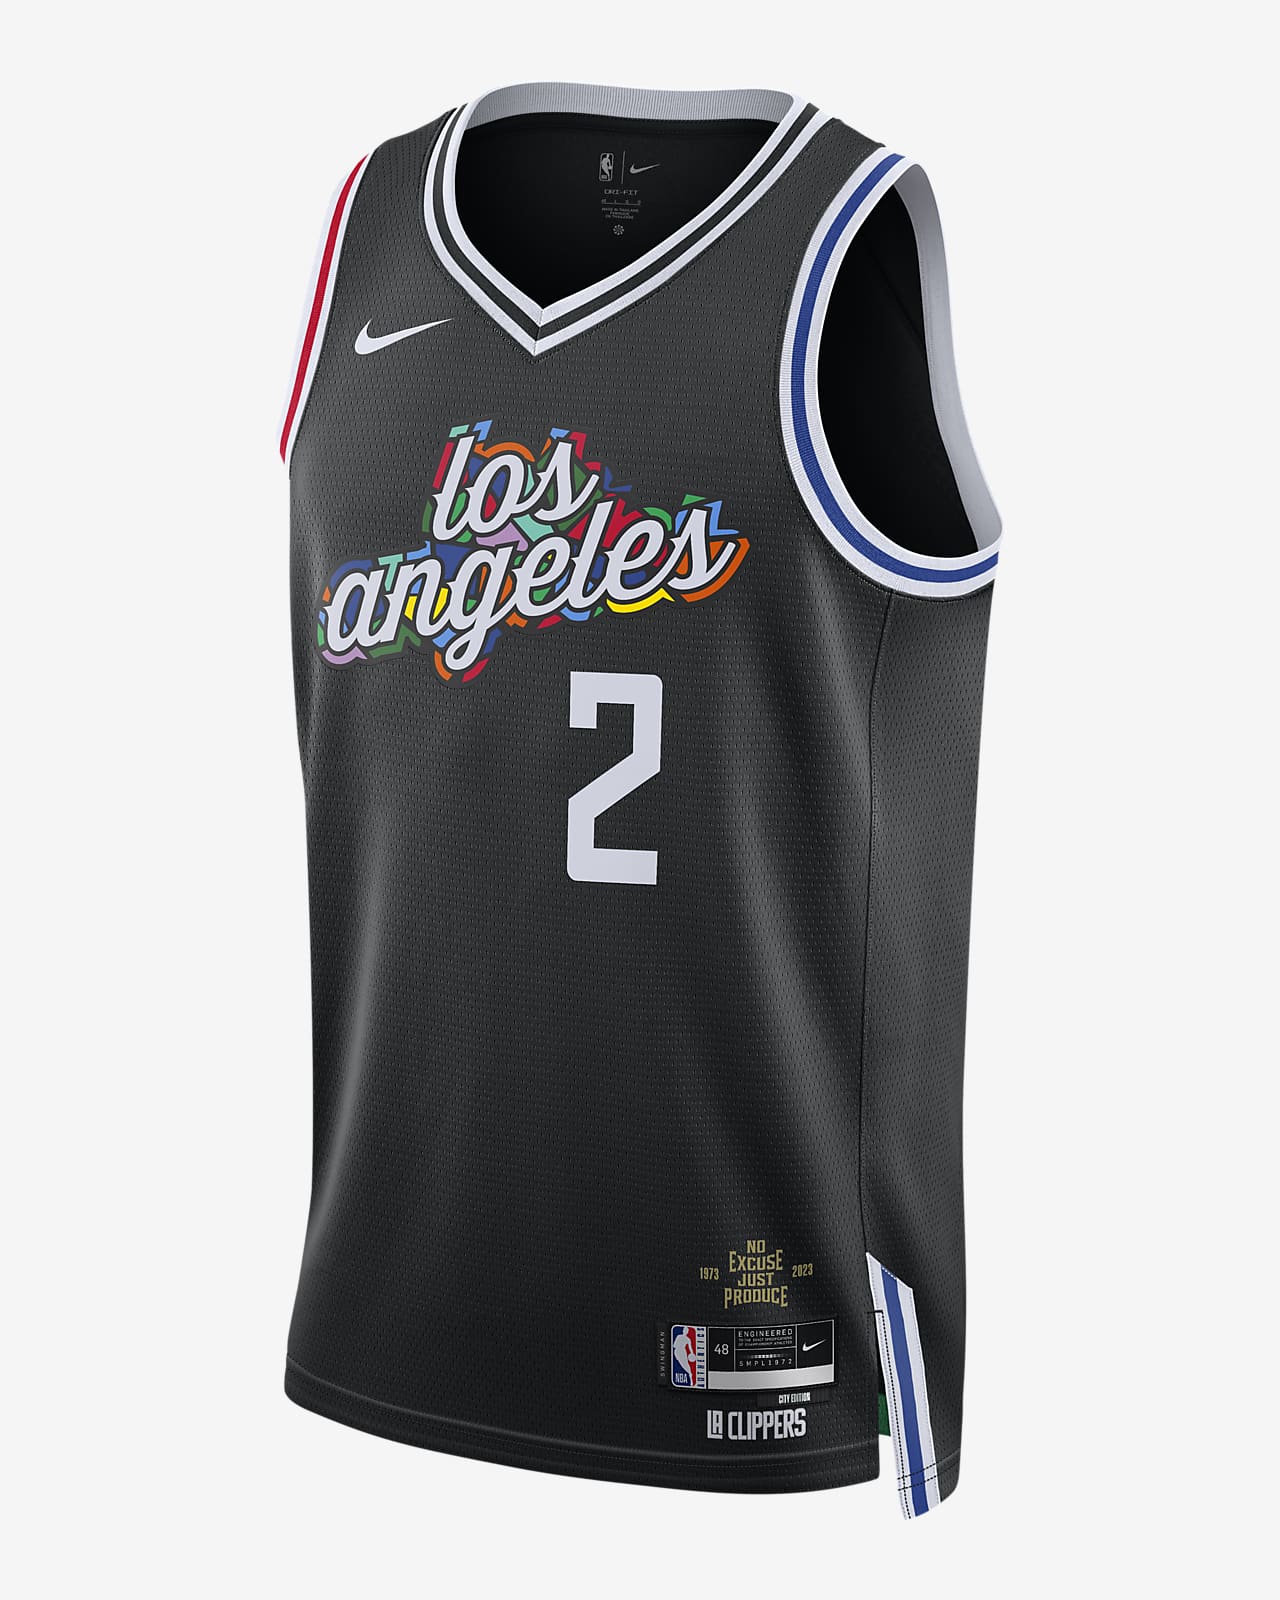 Kawhi Leonard Los Angeles Clippers City Edition Nike Dri-FIT NBA Swingman Jersey